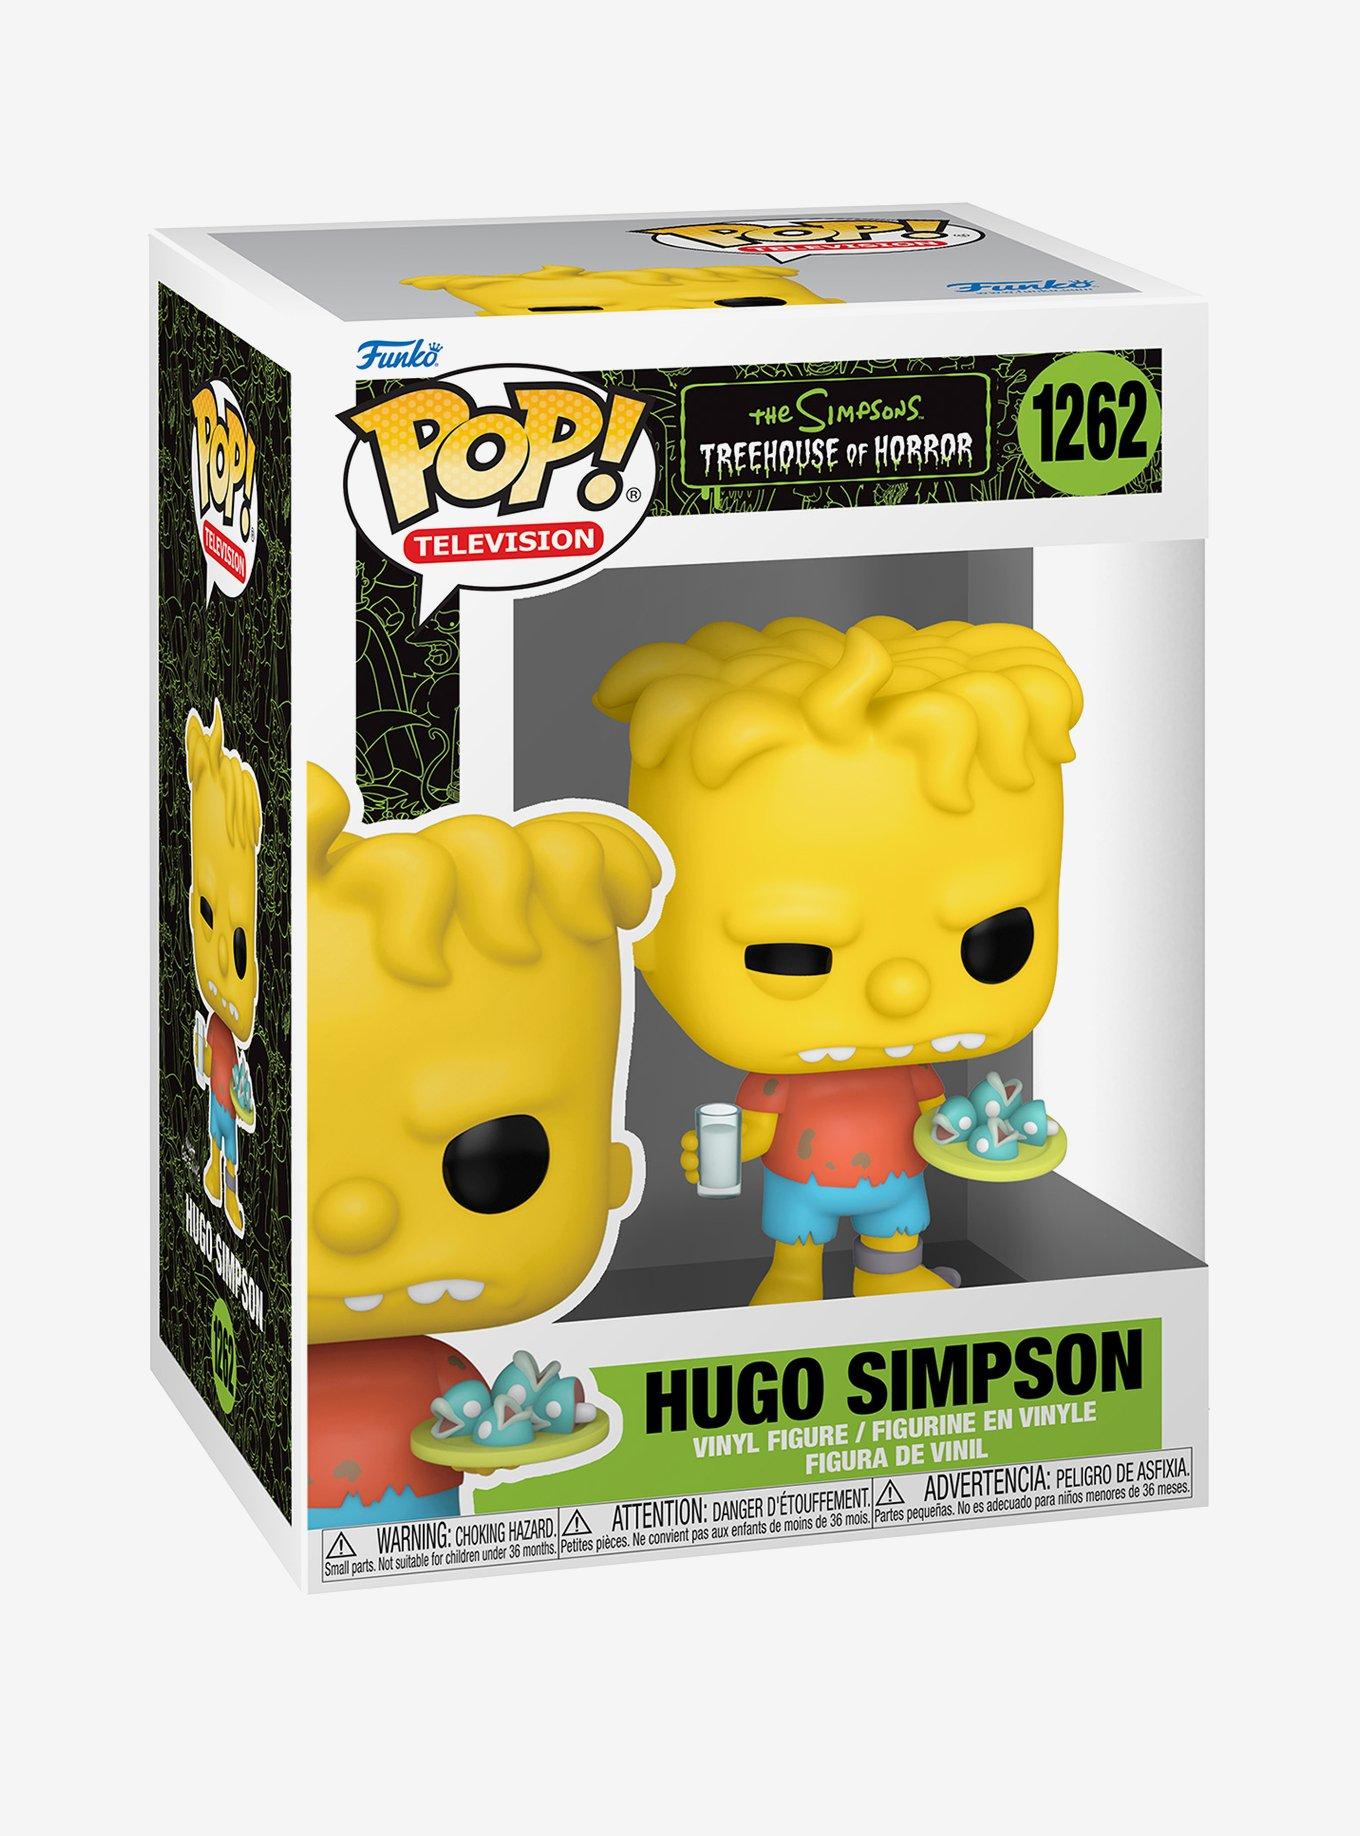 Funko The Simpsons Pop! Television Treehouse Of Horror Hugo Simpson Vinyl Figure